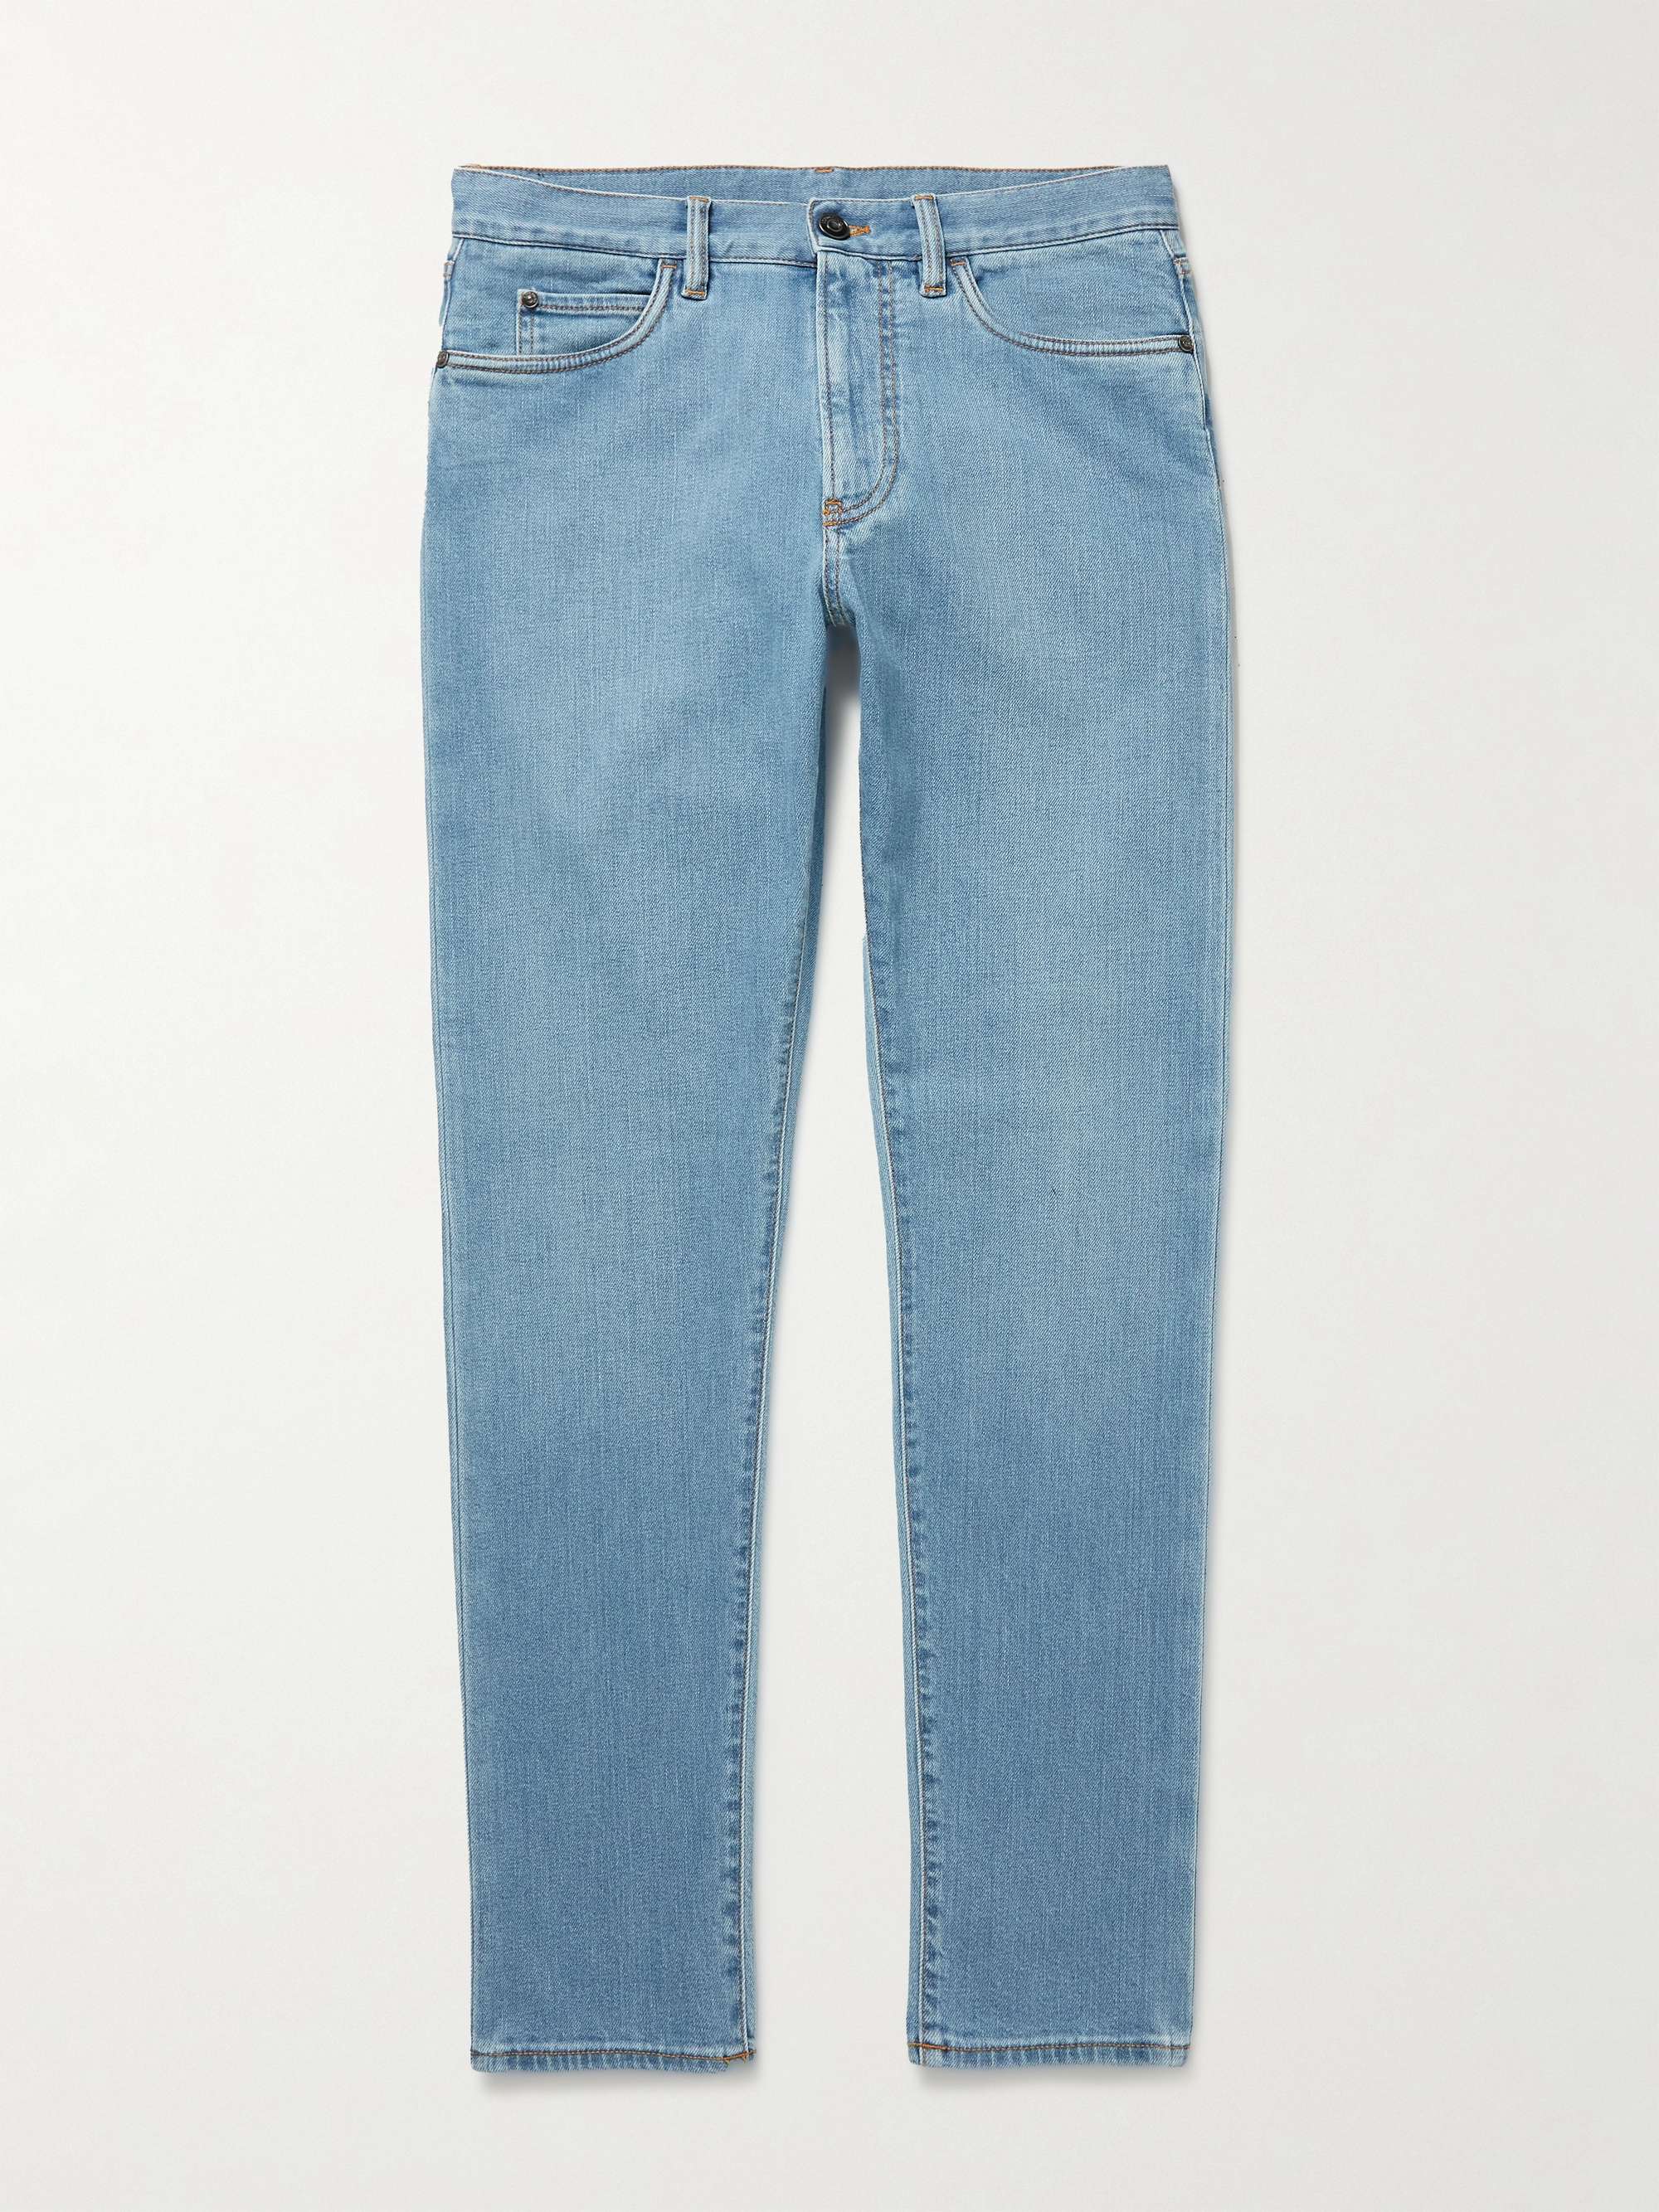 LORO PIANA Slim-Fit Jeans | MR PORTER